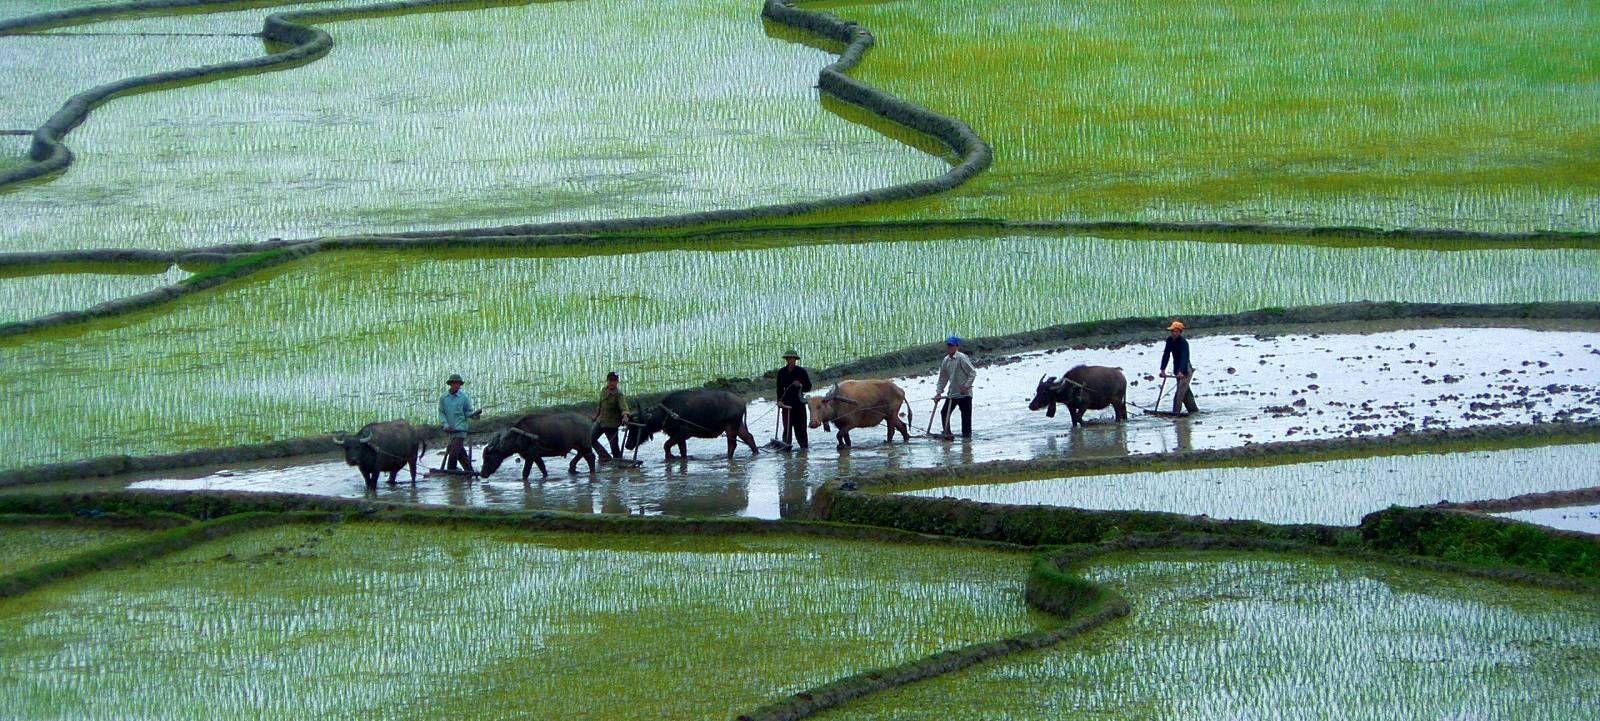 Local farmers in Vietnam